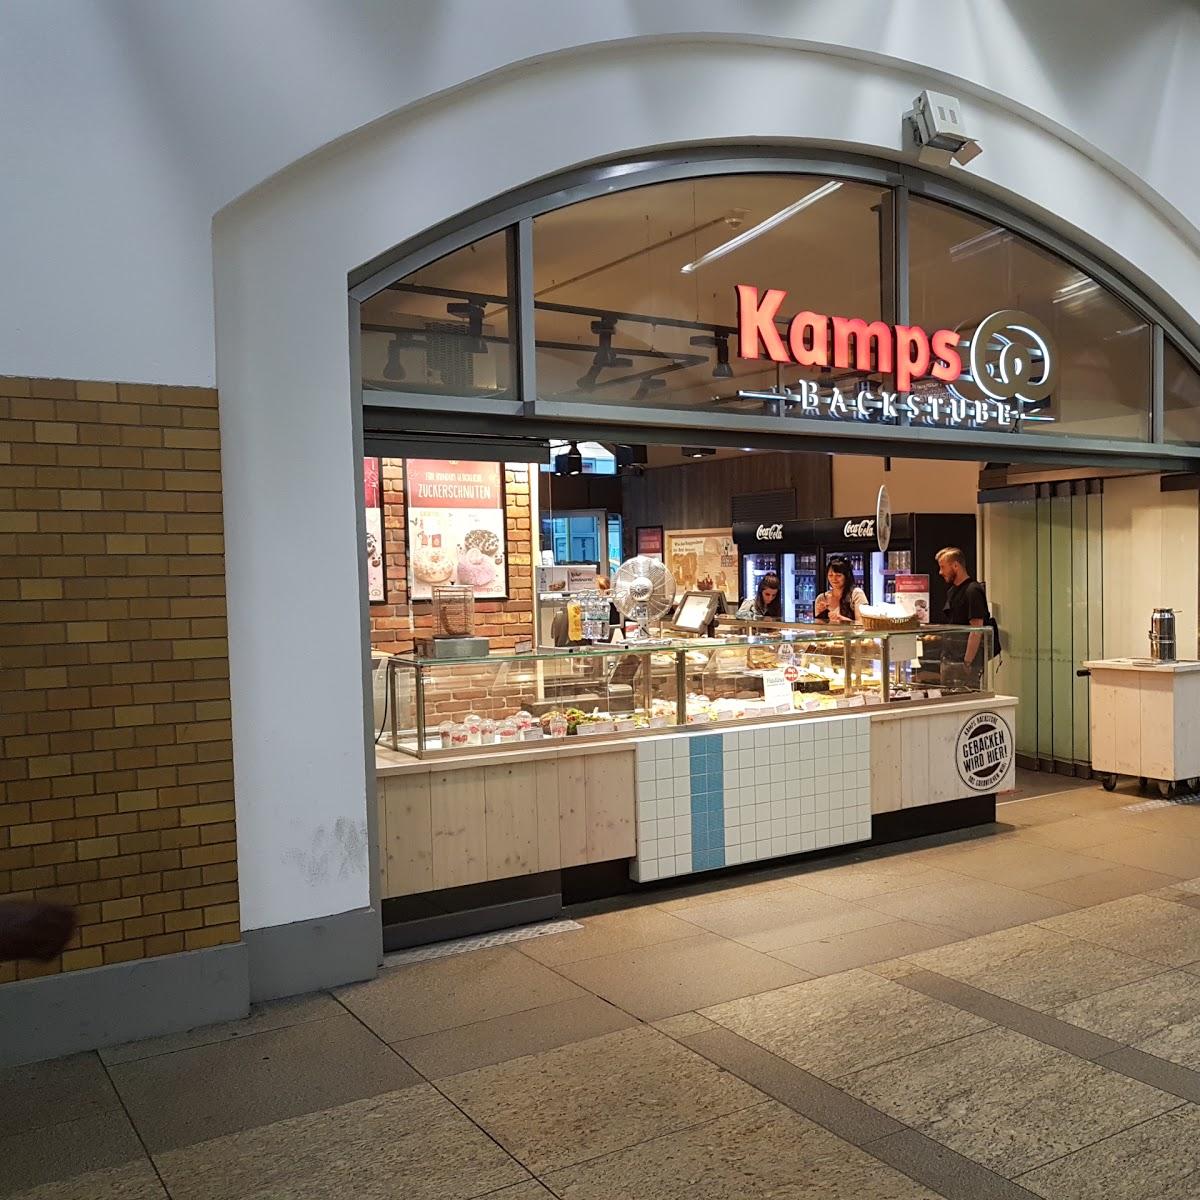 Restaurant "Kamps Bäckerei" in Berlin